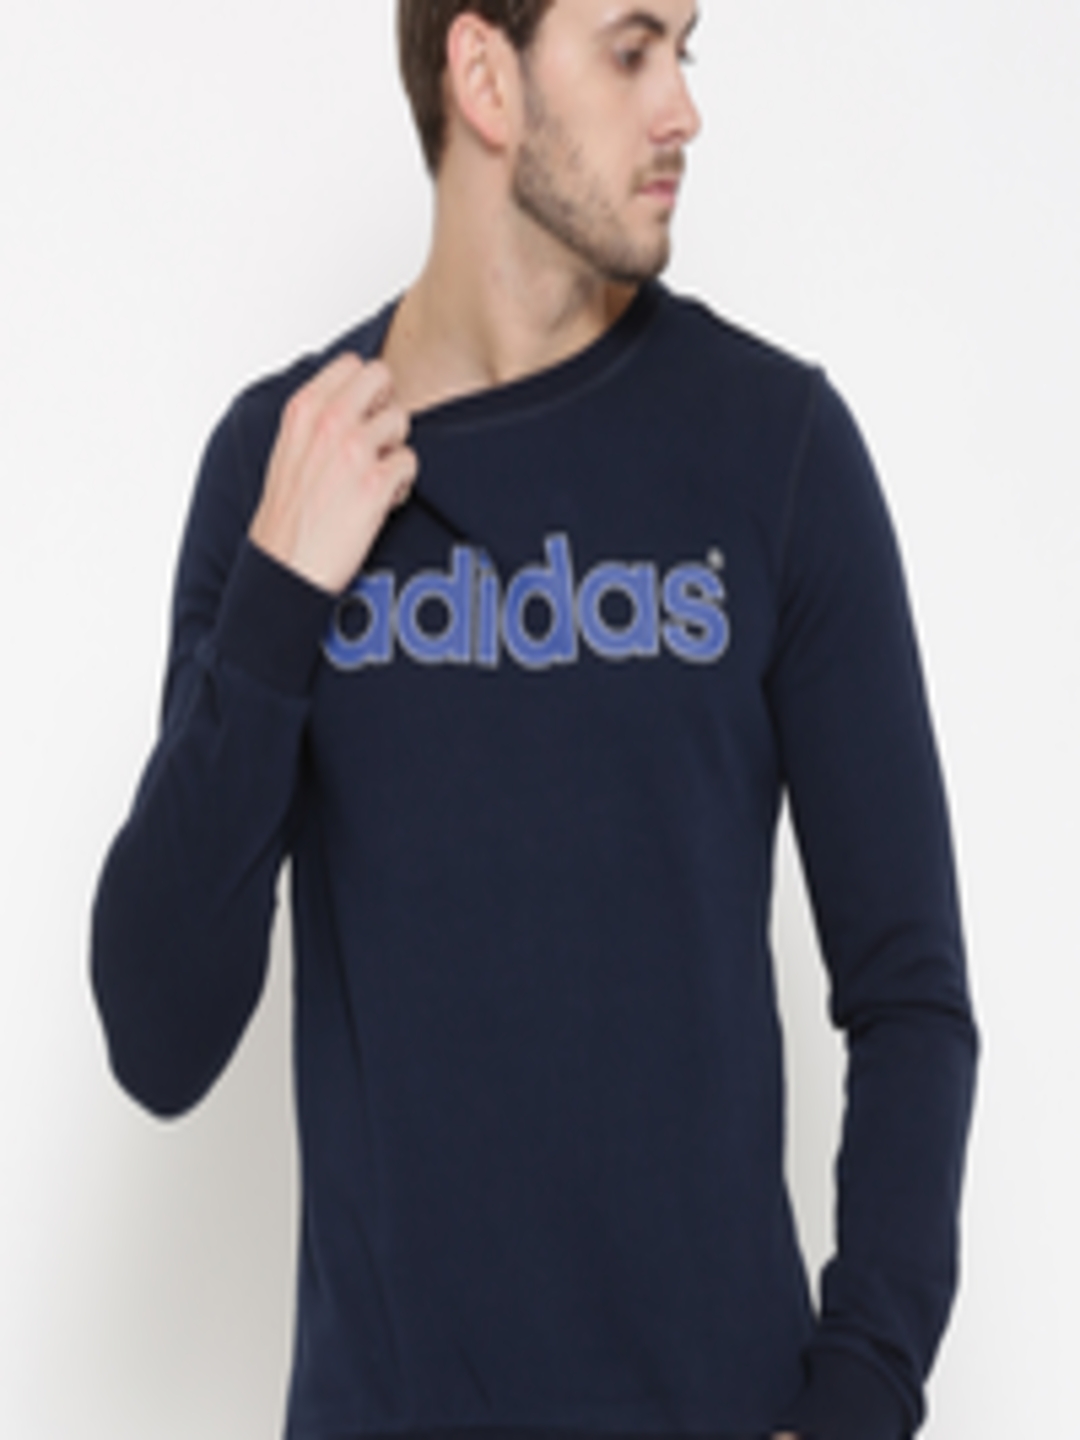 Buy ADIDAS NEO Navy CE LG FT Printed Sweatshirt - Sweatshirts for Men ...